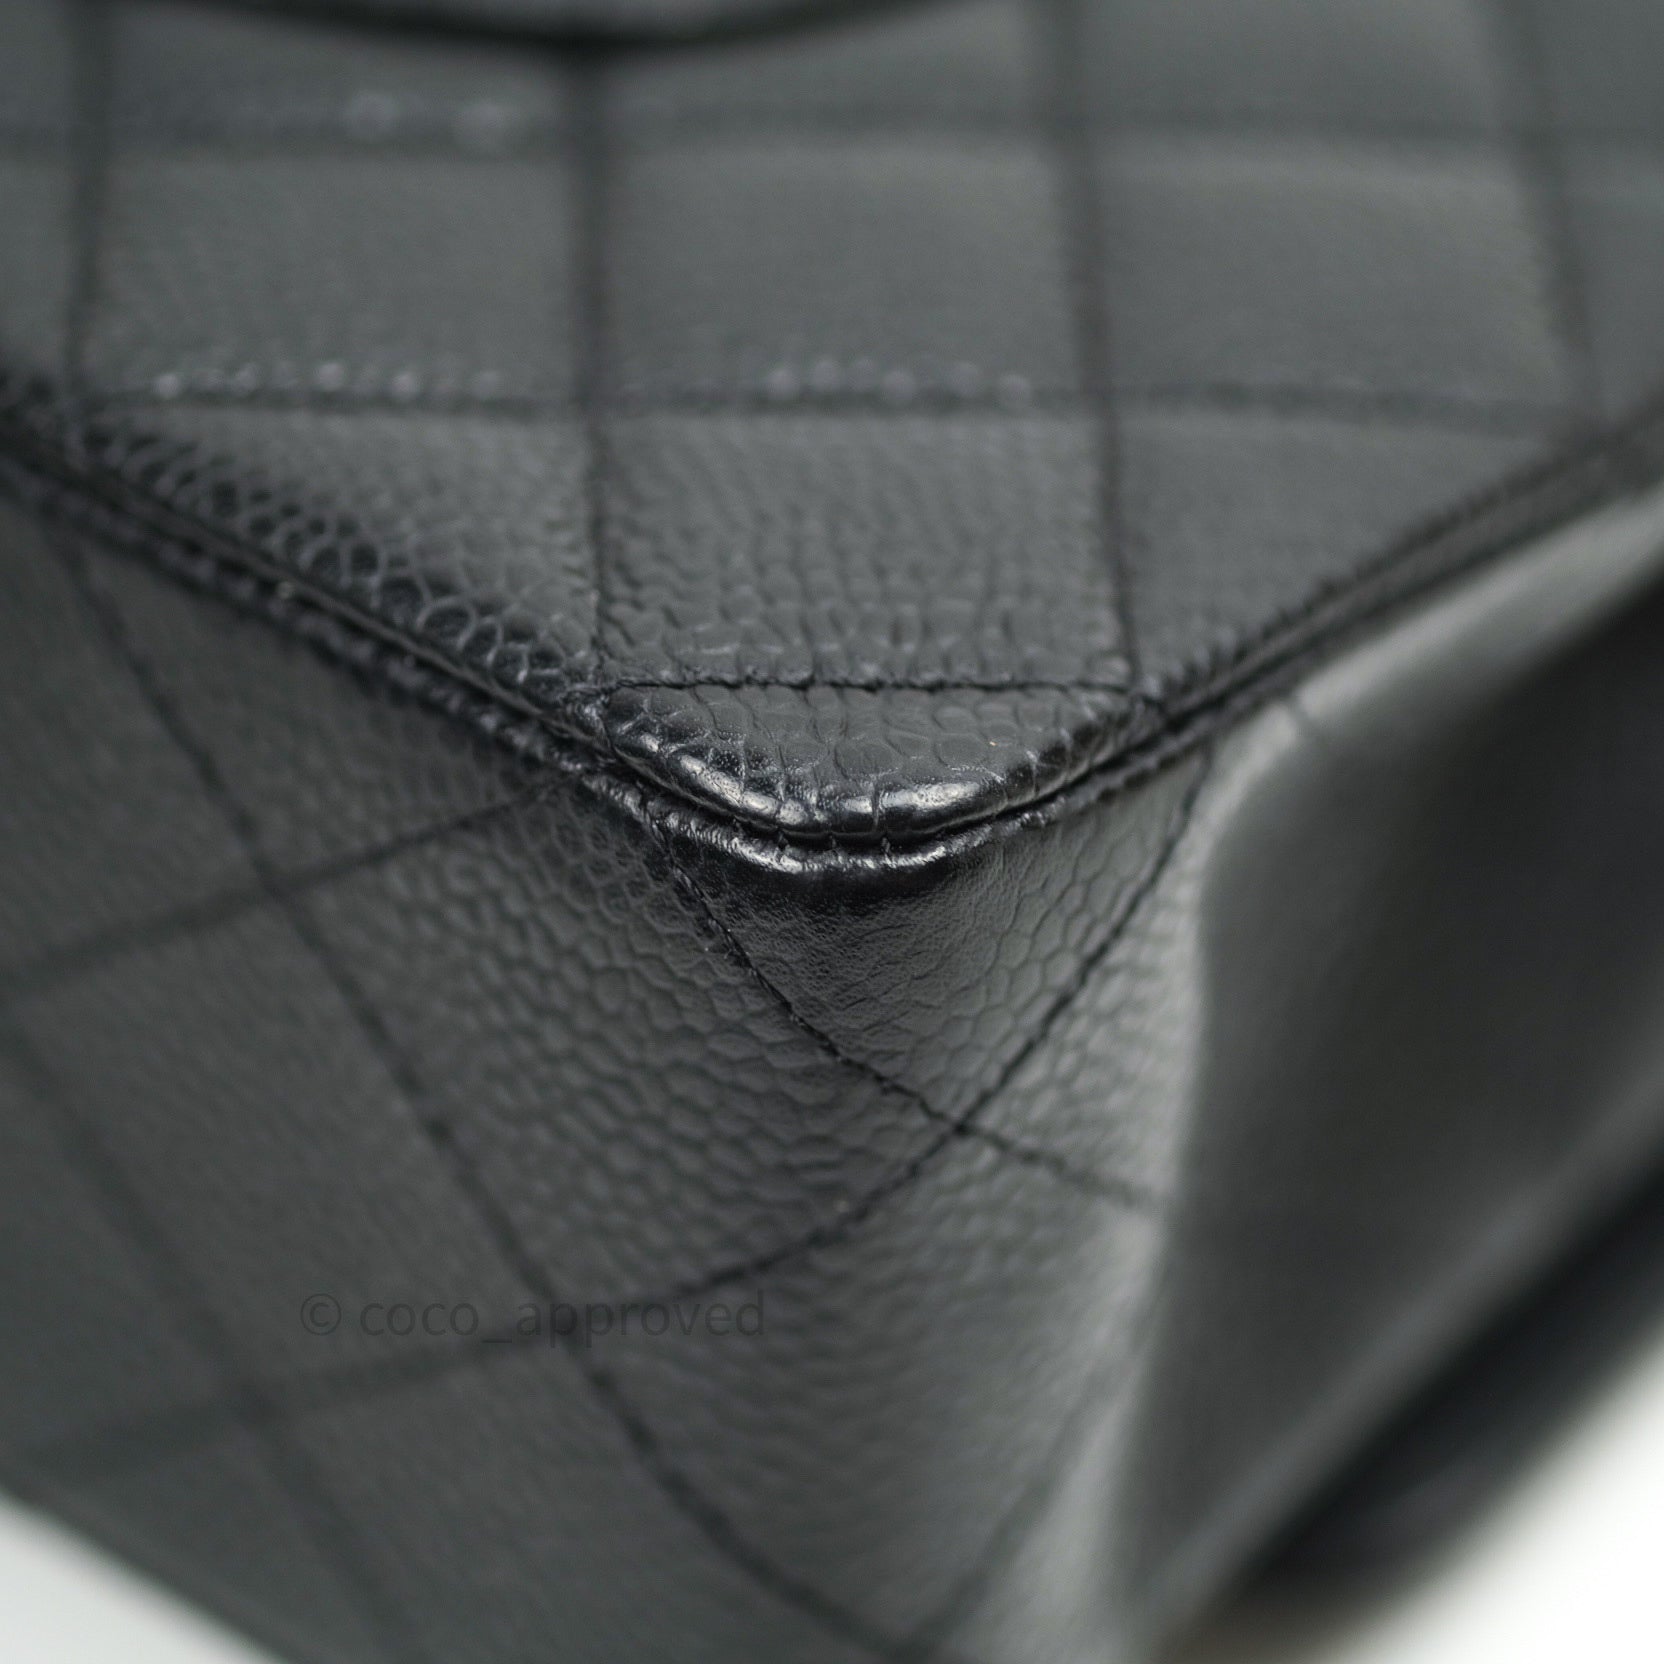 Chanel Classic M/L Medium Double Flap Bag Black Caviar Silver